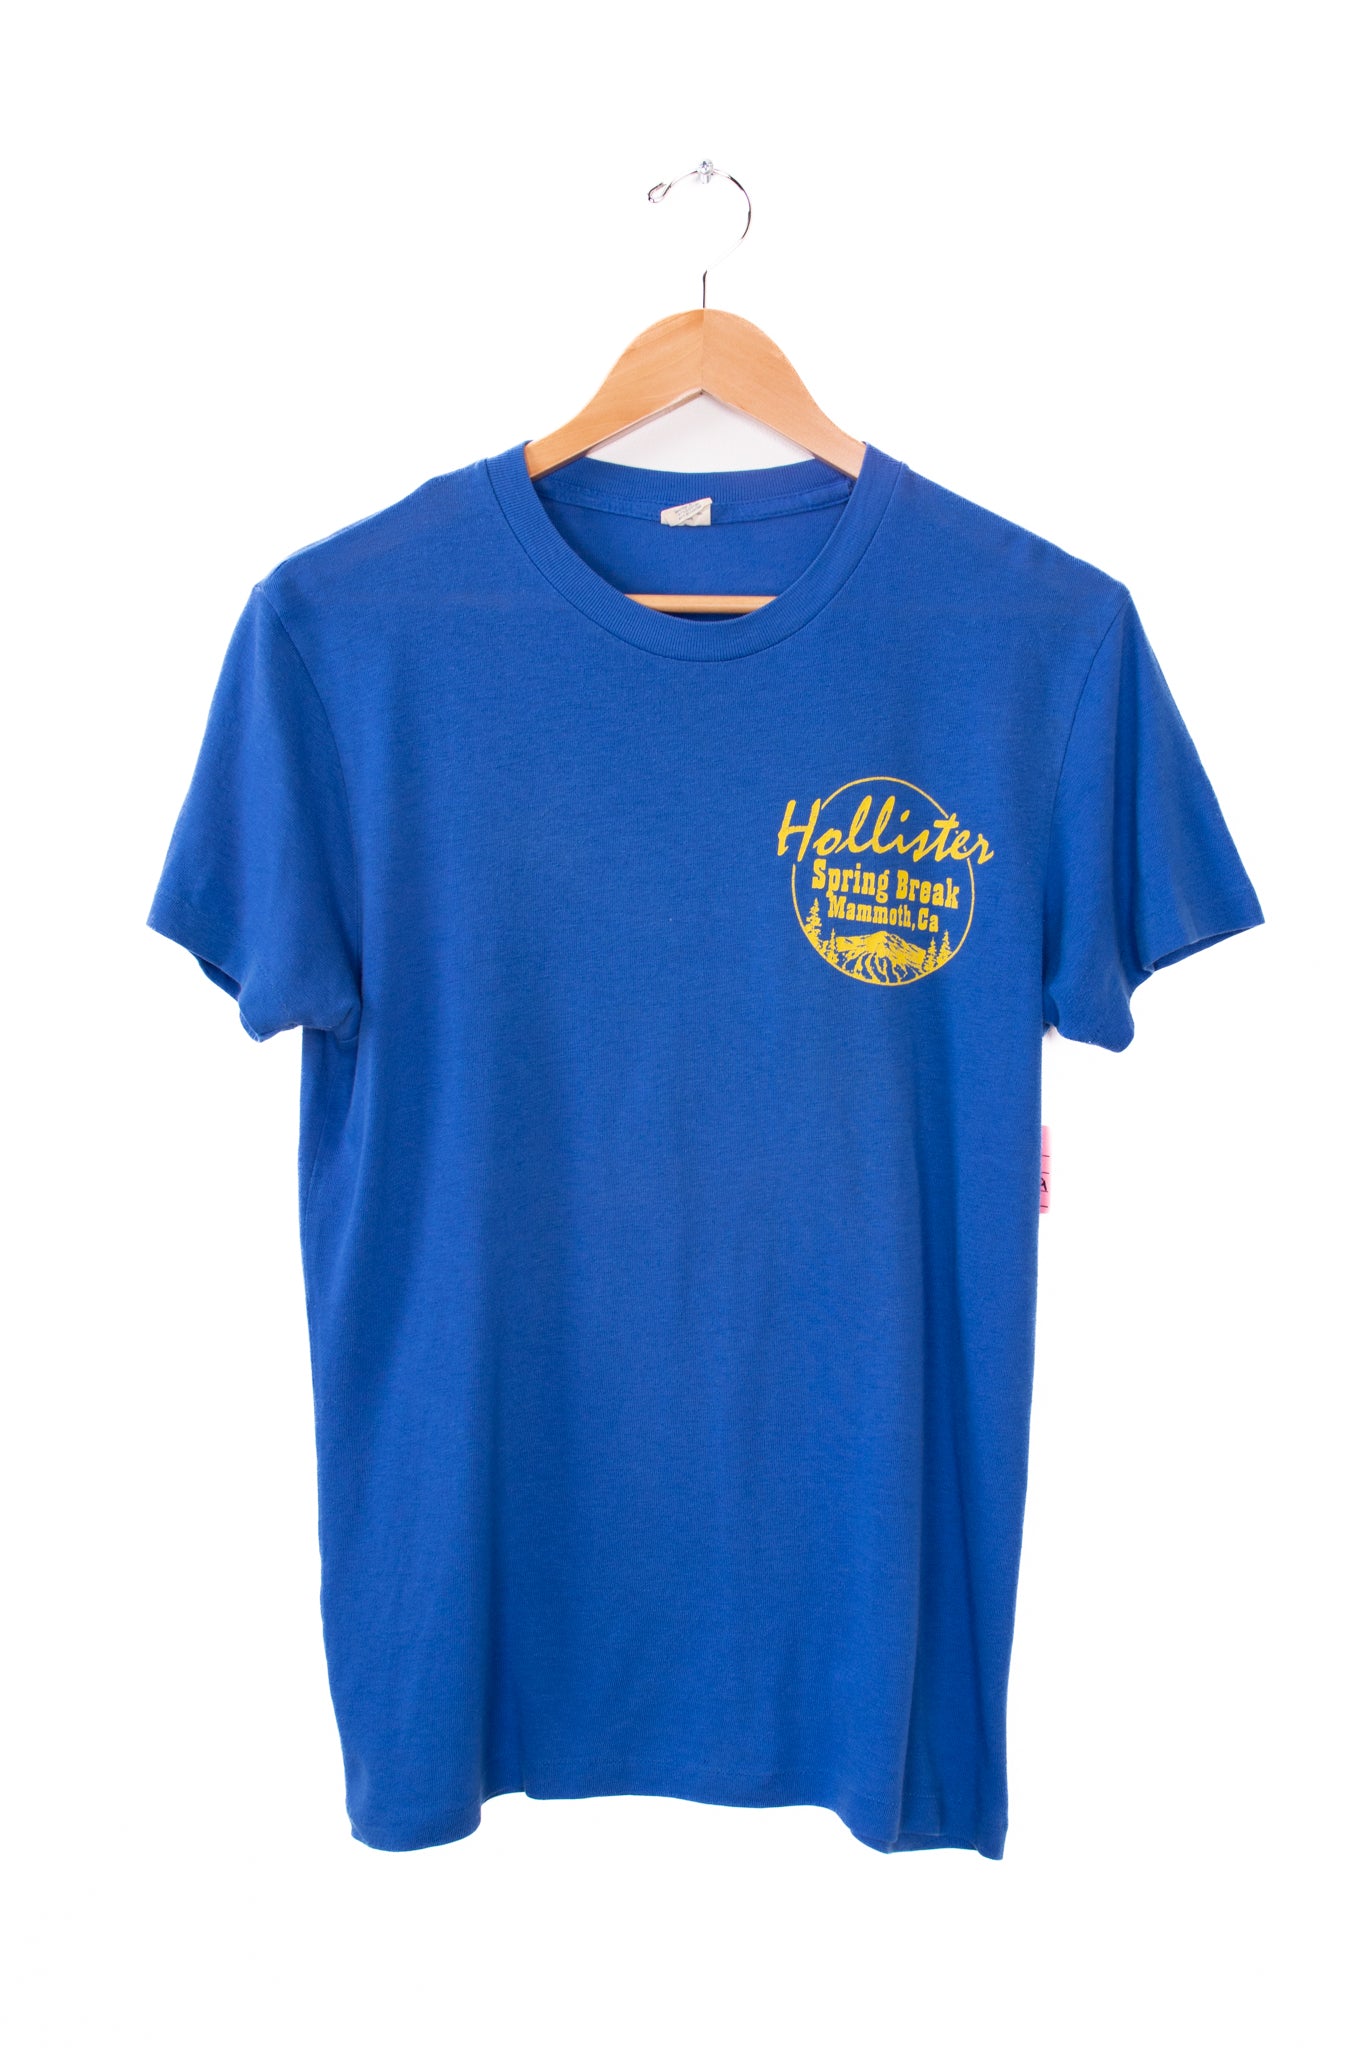 Vintage 80s Hollister "Spring Break in Mammoth, California" T-Shirt